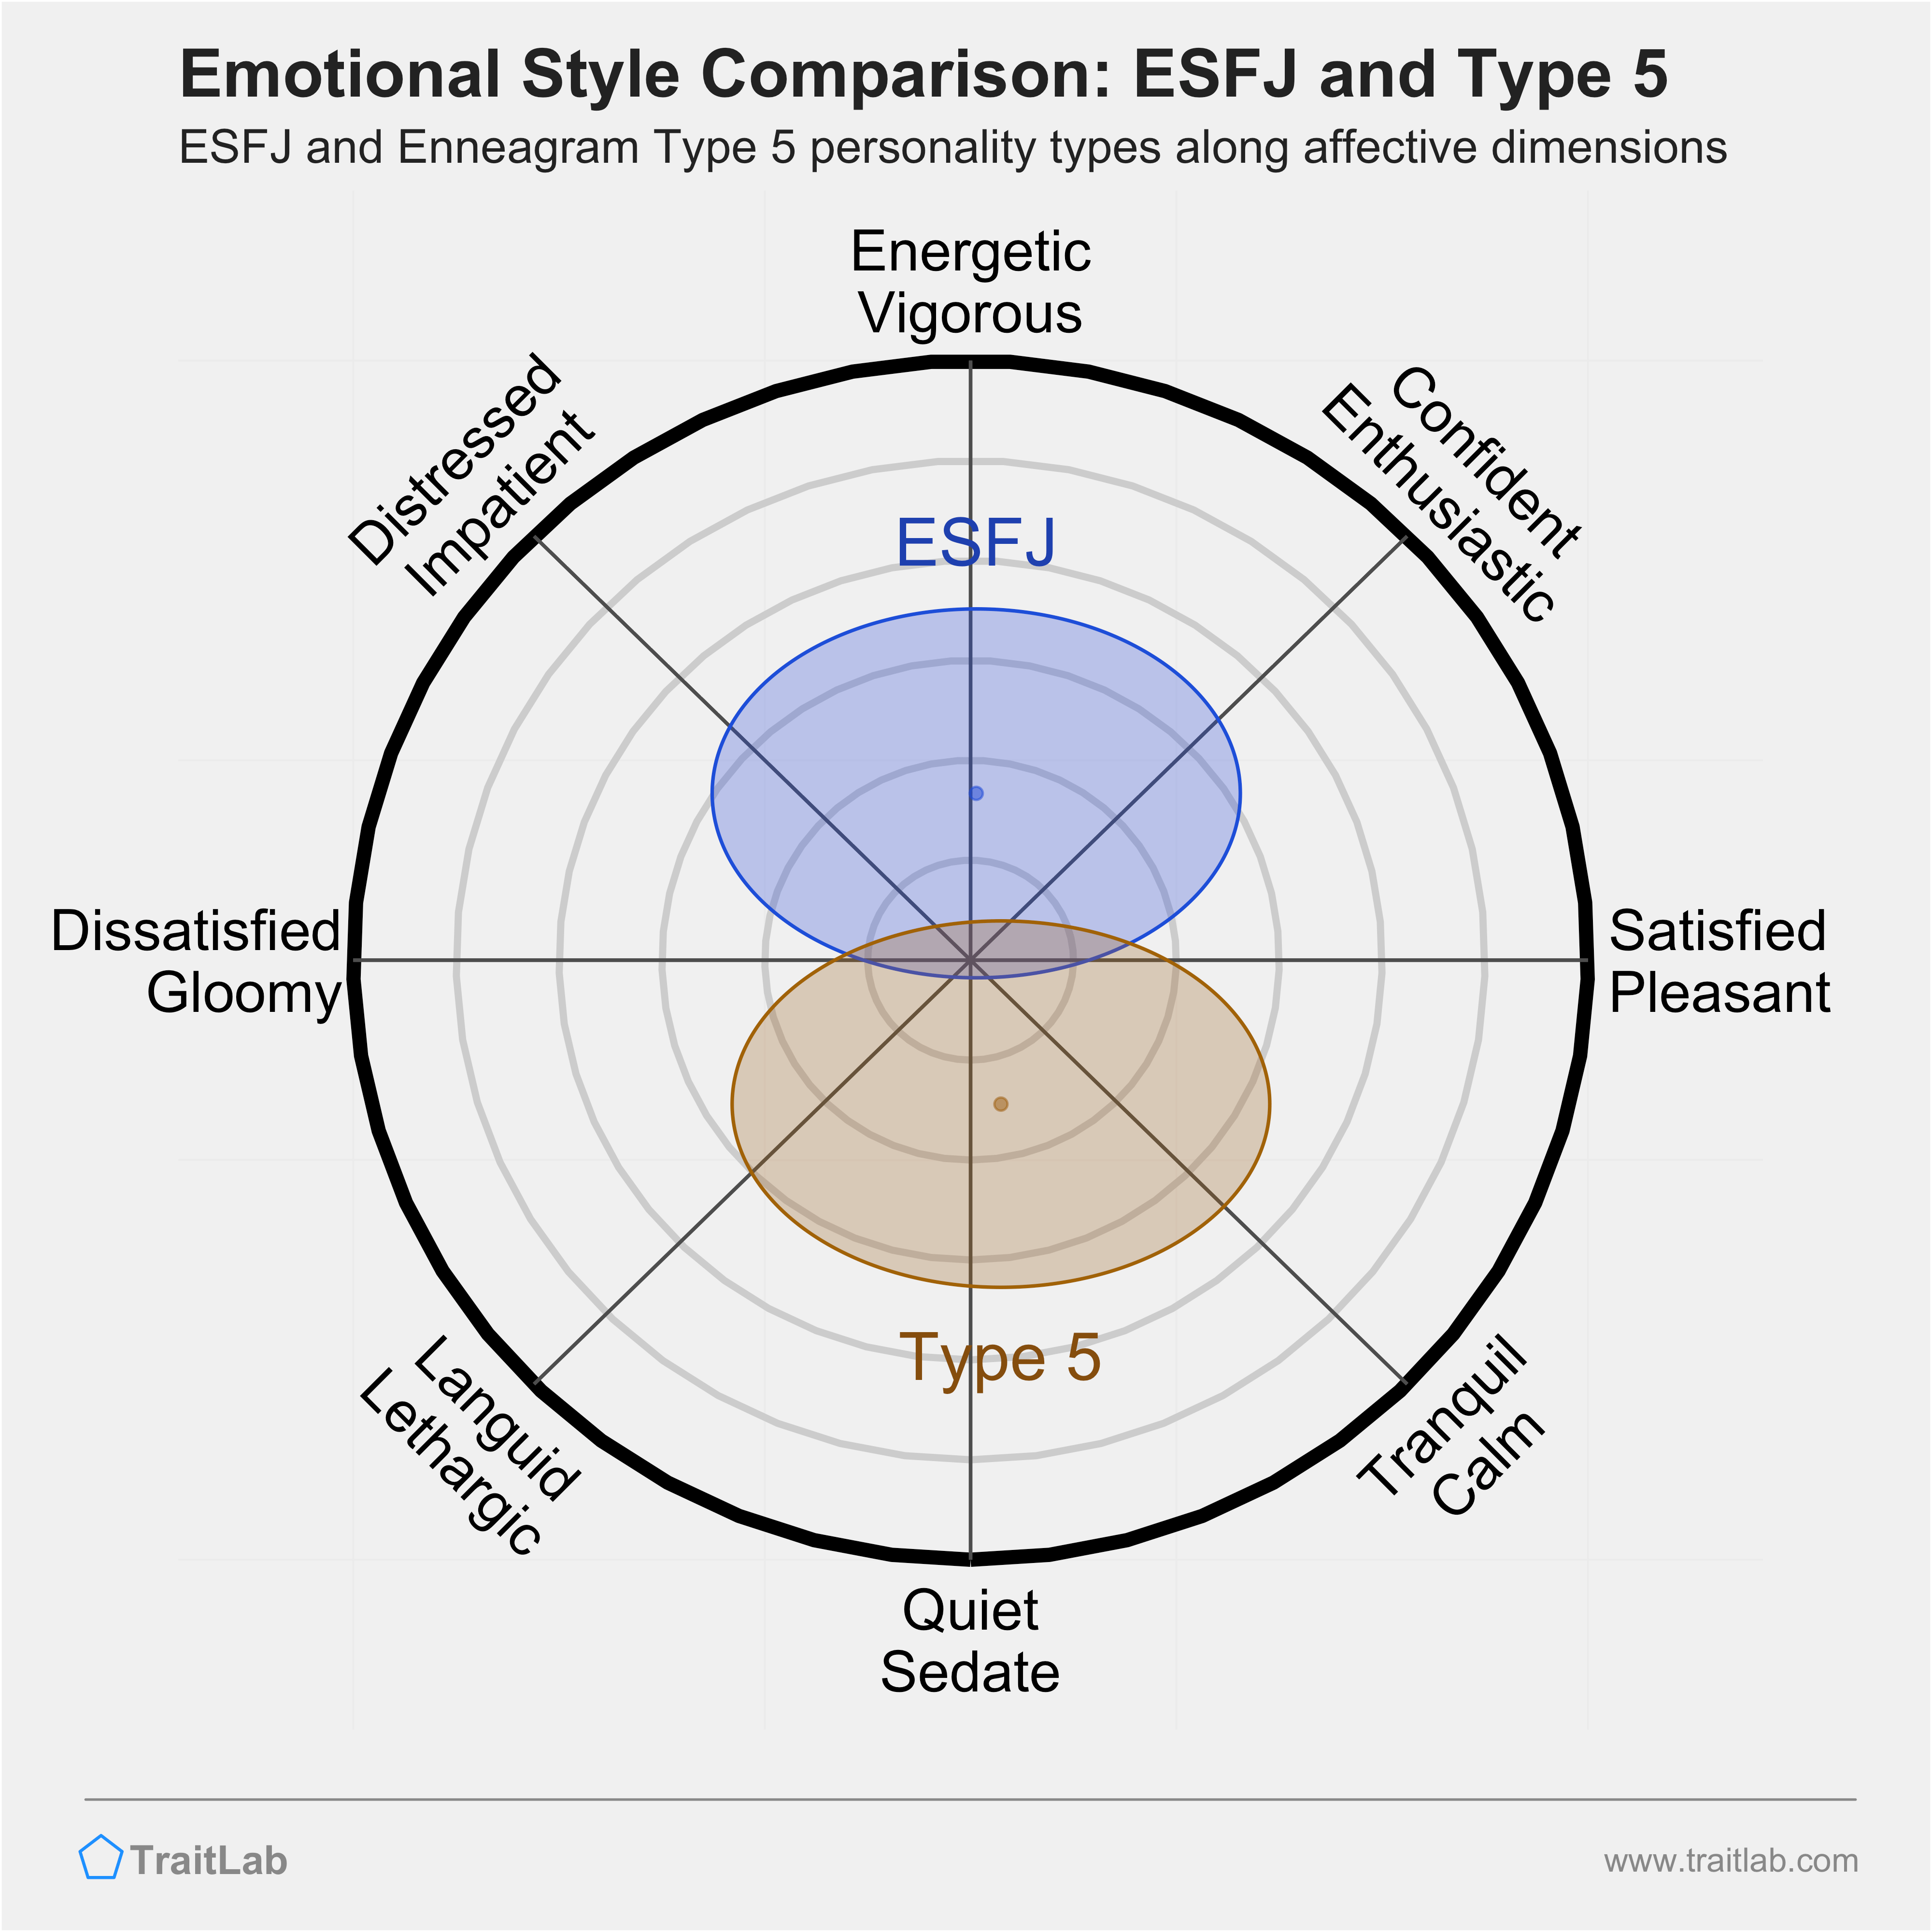 ESFJ and Type 5 comparison across emotional (affective) dimensions